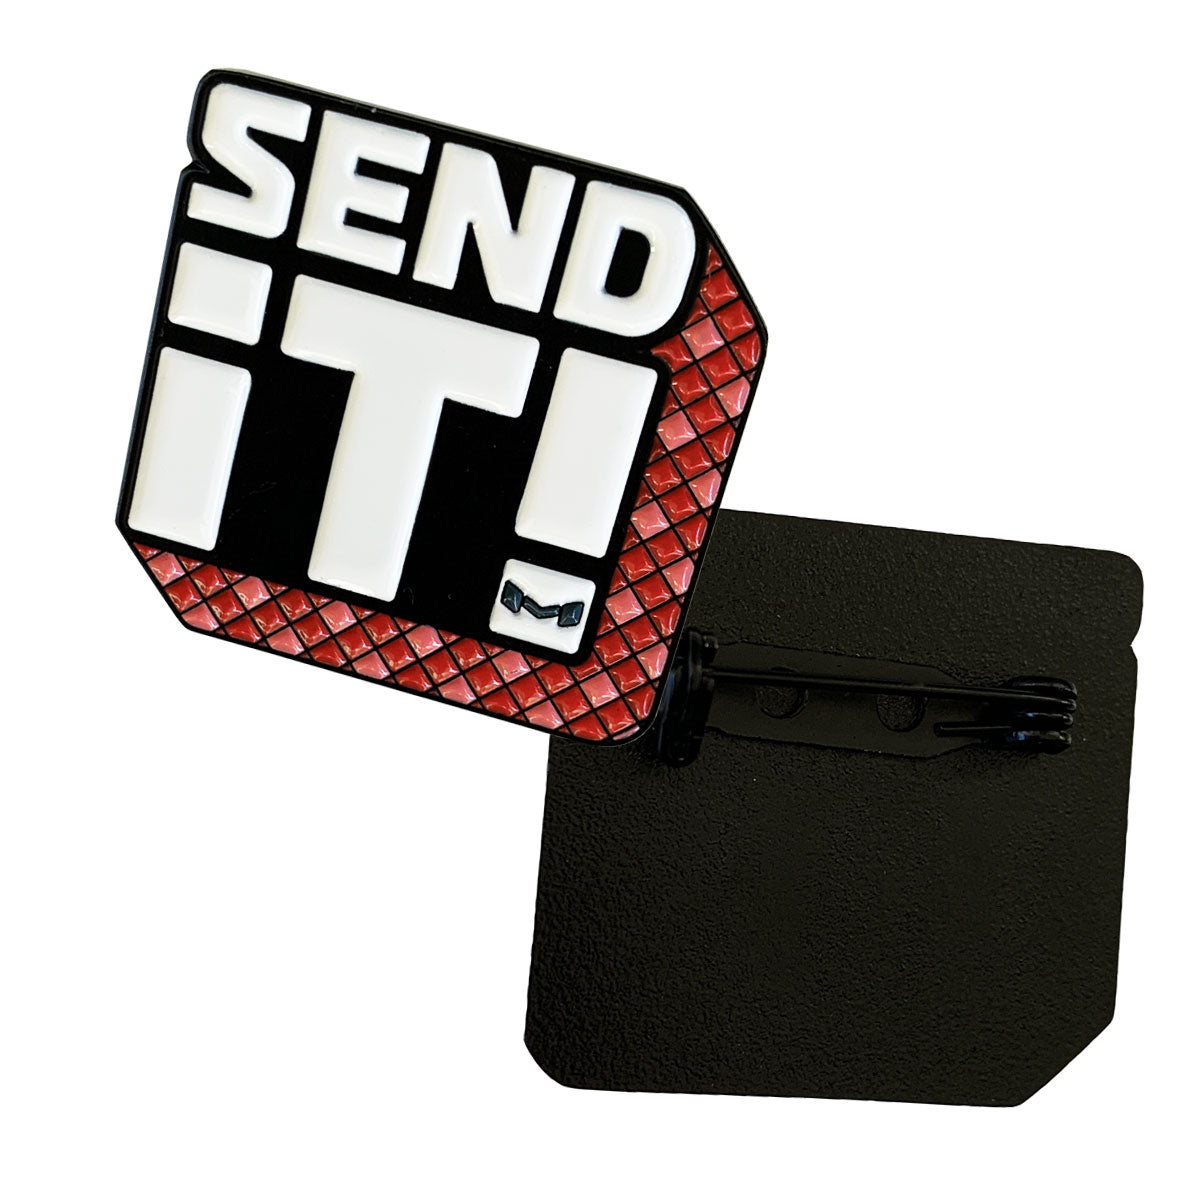 Pin - Send It